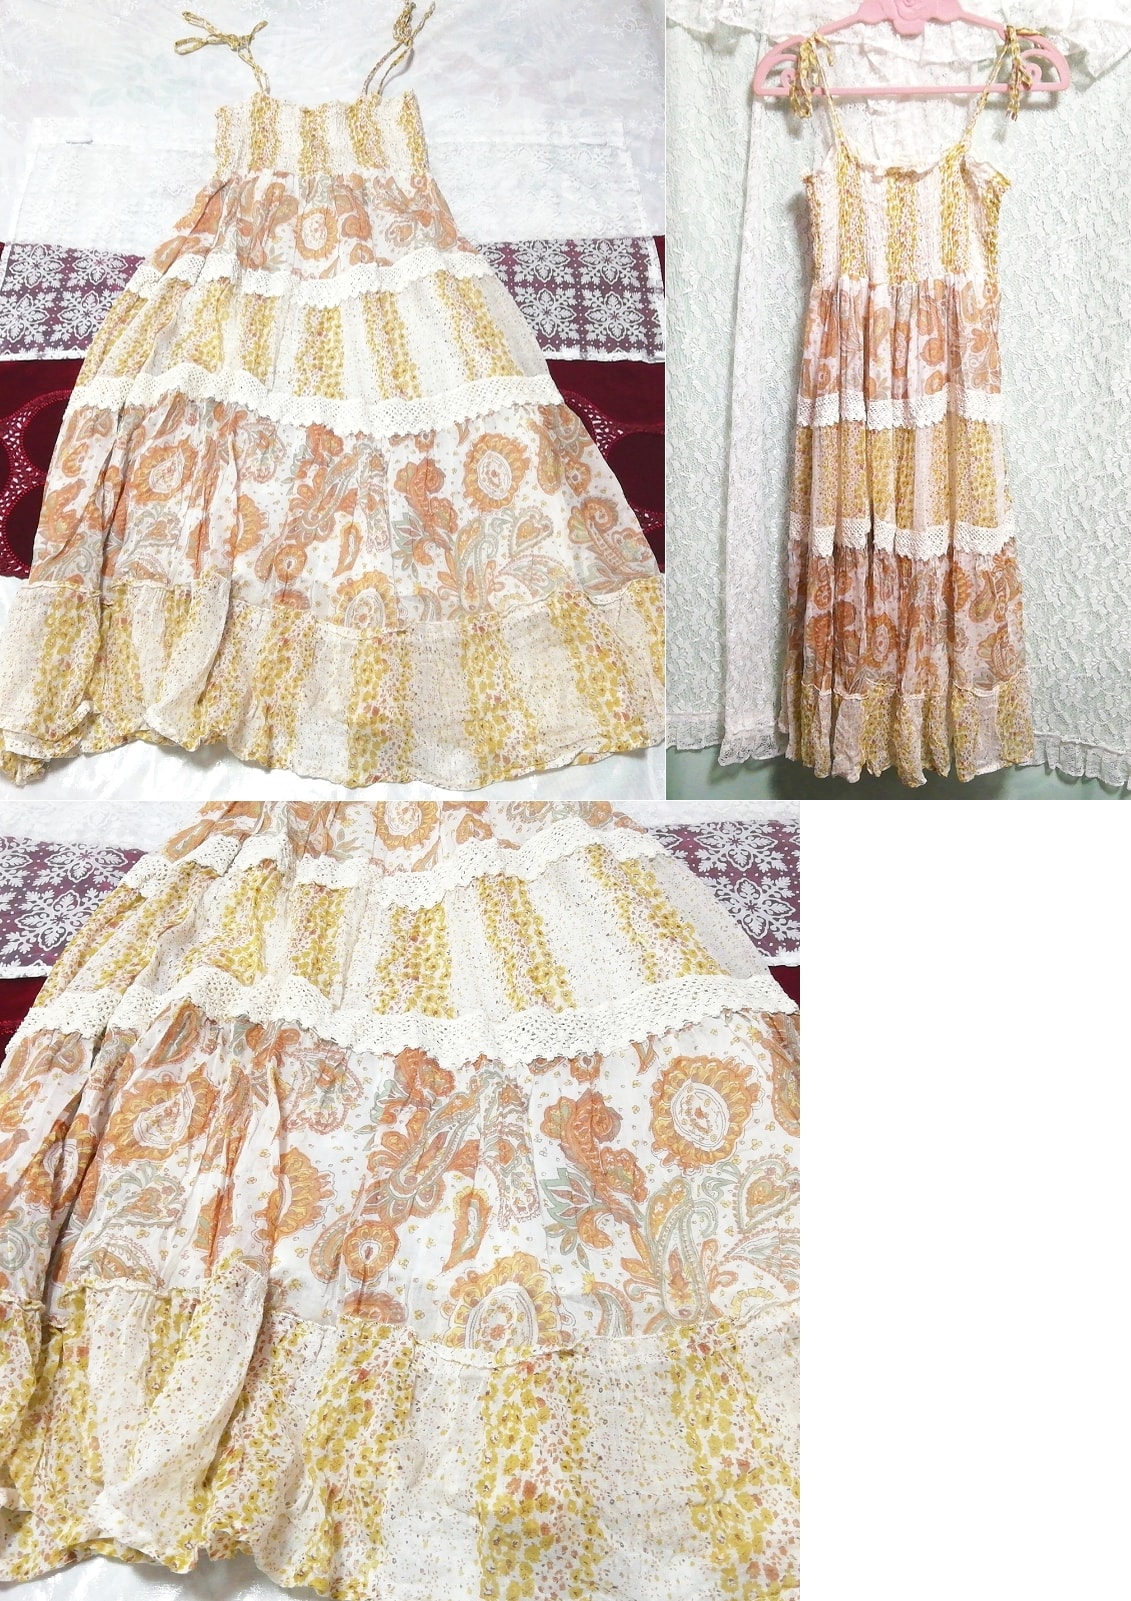 Flaxen ethnic pattern cotton chiffon negligee nightgown camisole dress, fashion, ladies' fashion, camisole